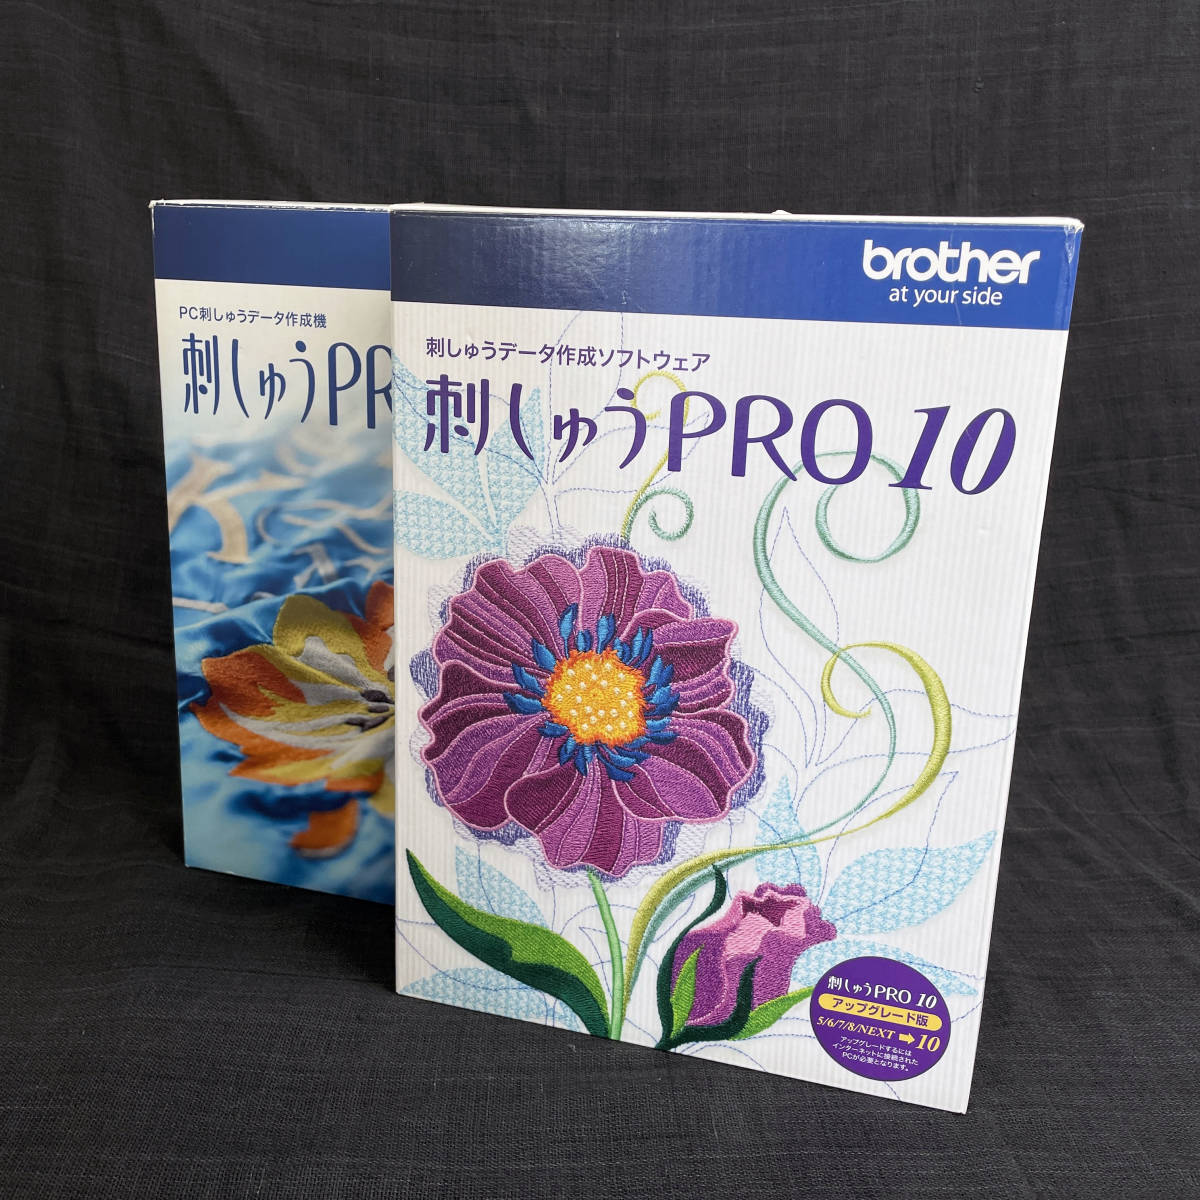 Brother 刺しゅうPRO 10 NEXT Ver.6 刺しゅうデータ作成 ソフトウェア